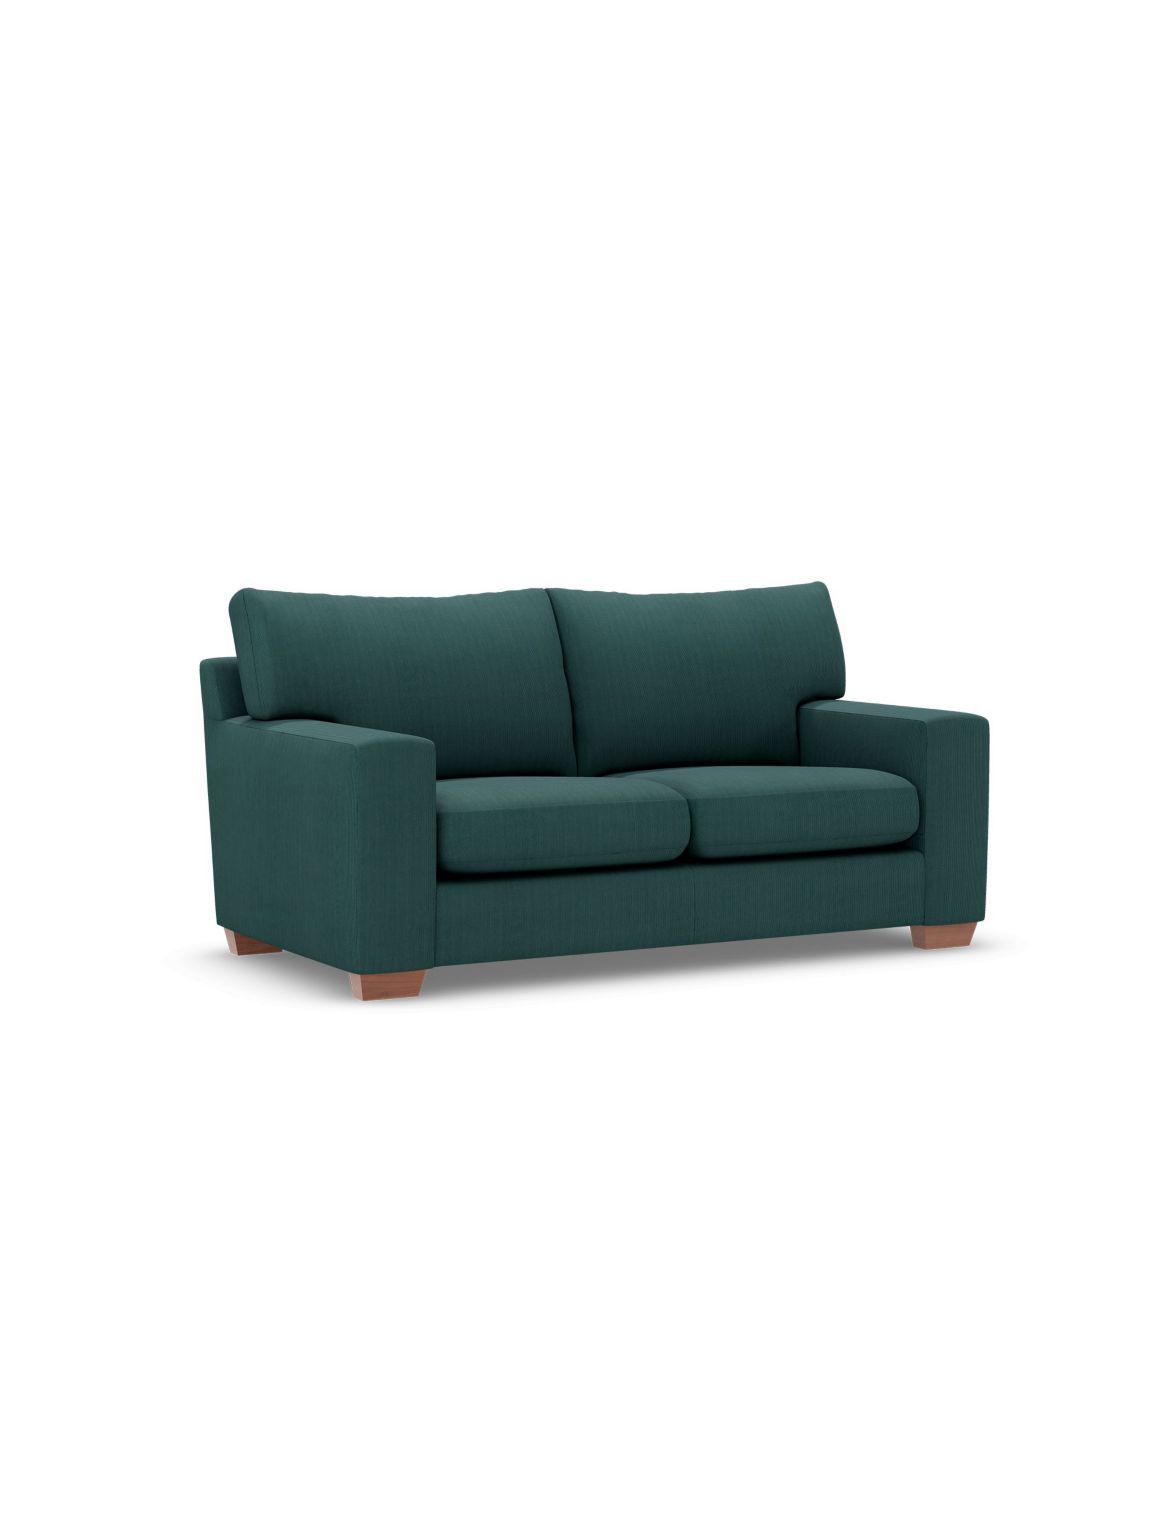 Alfie Small Sofa green